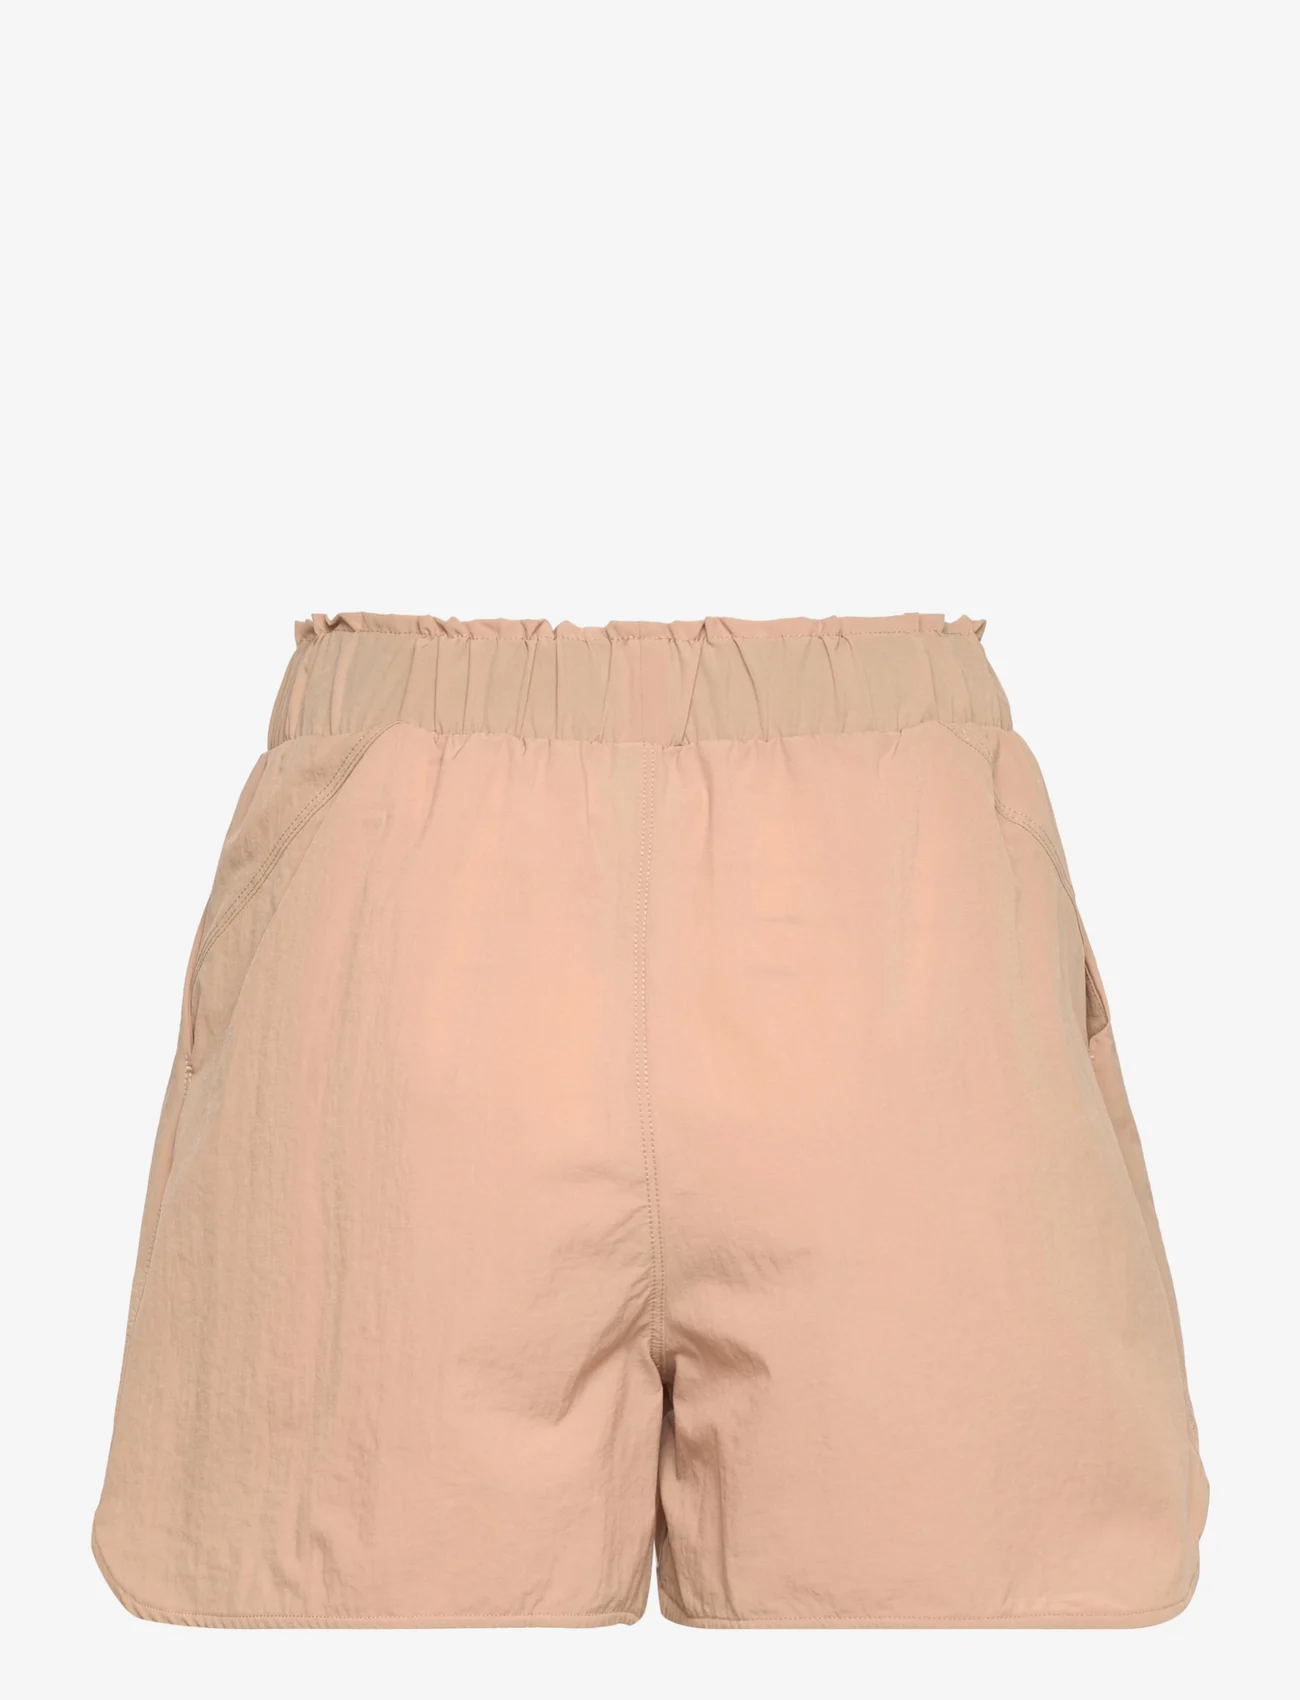 Svea - W. Drawstring Shorts - casual korte broeken - khaki - 1